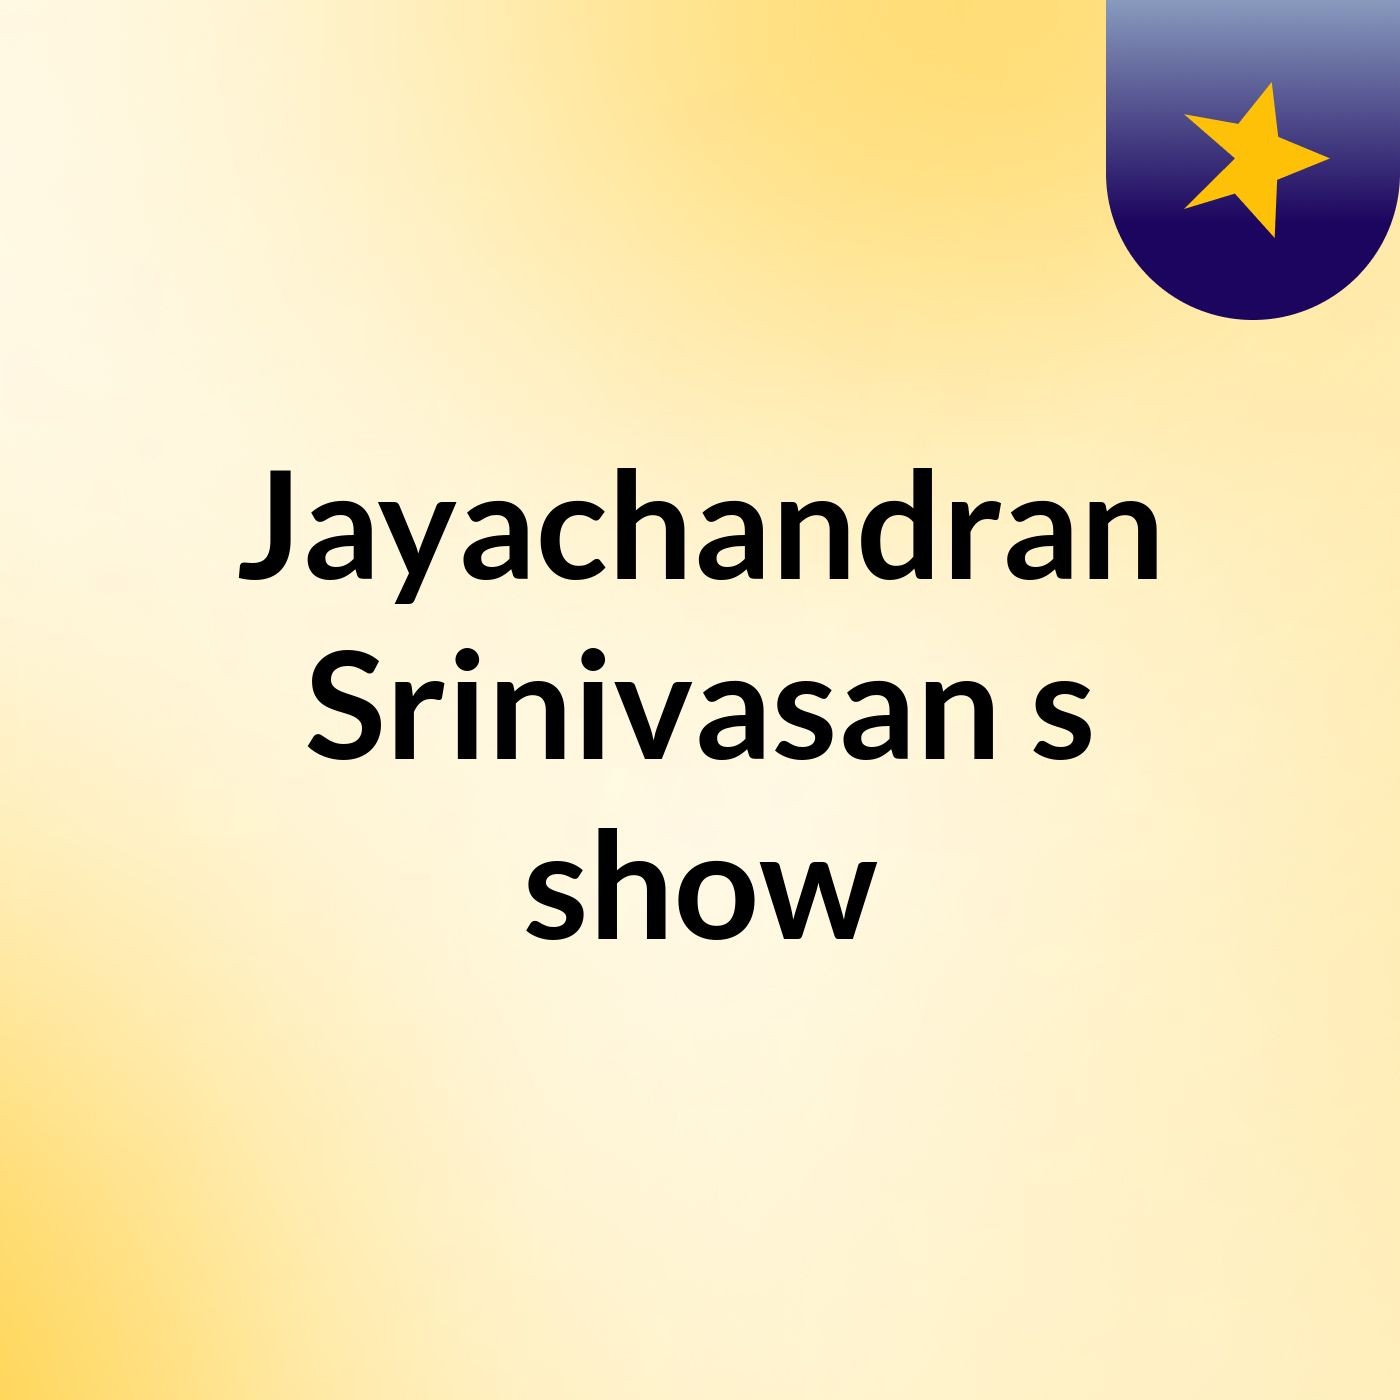 Jayachandran Srinivasan's show